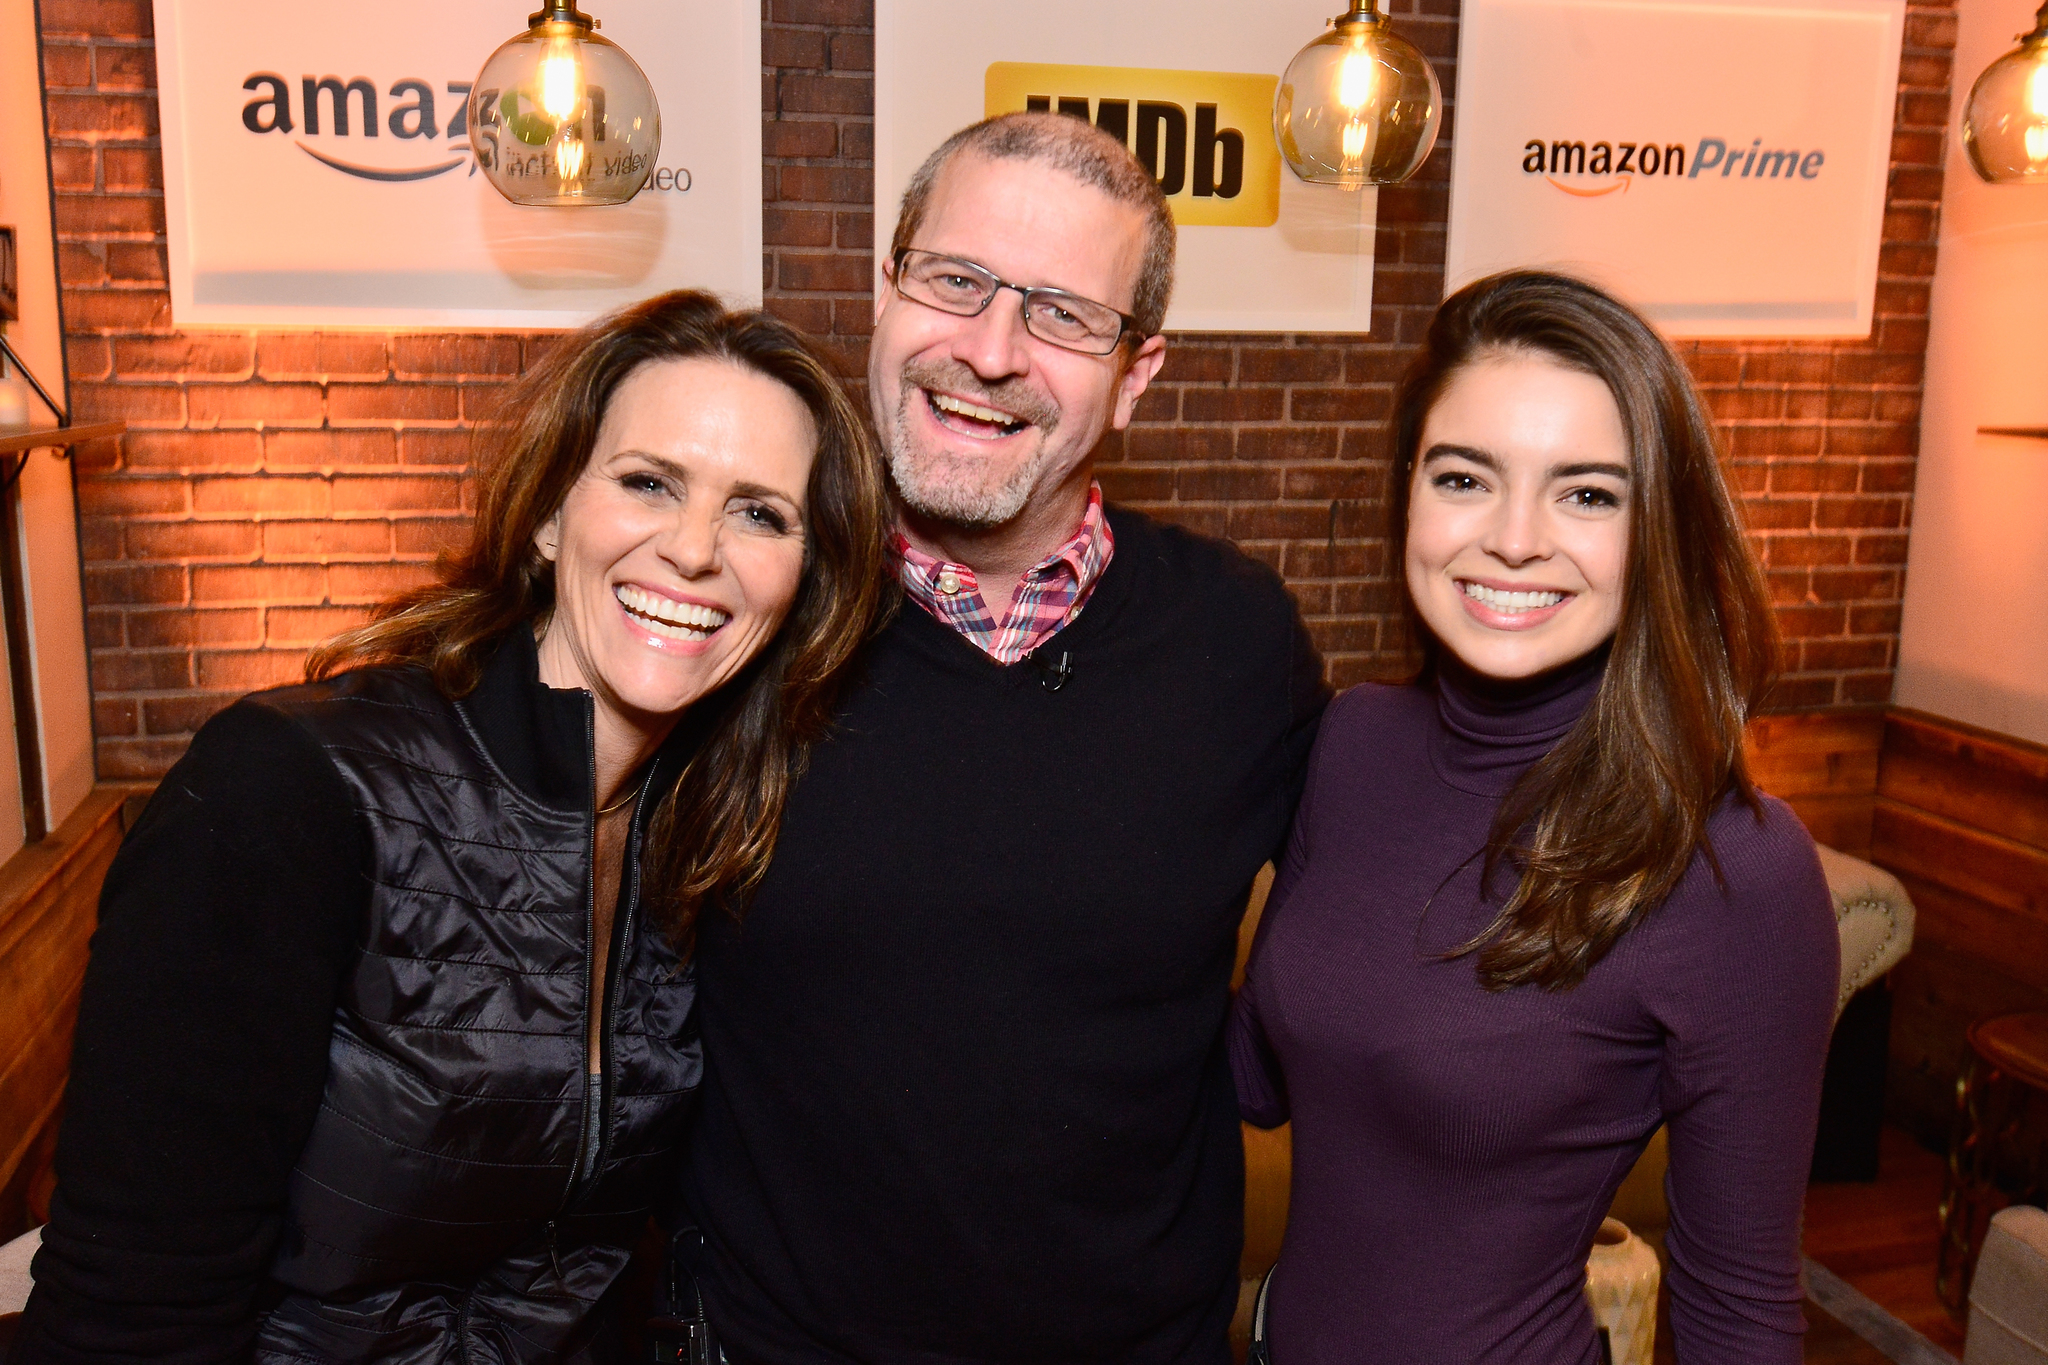 Amy Landecker, Katherine Hughes and Keith Simanton at event of IMDb & AIV Studio at Sundance (2015)